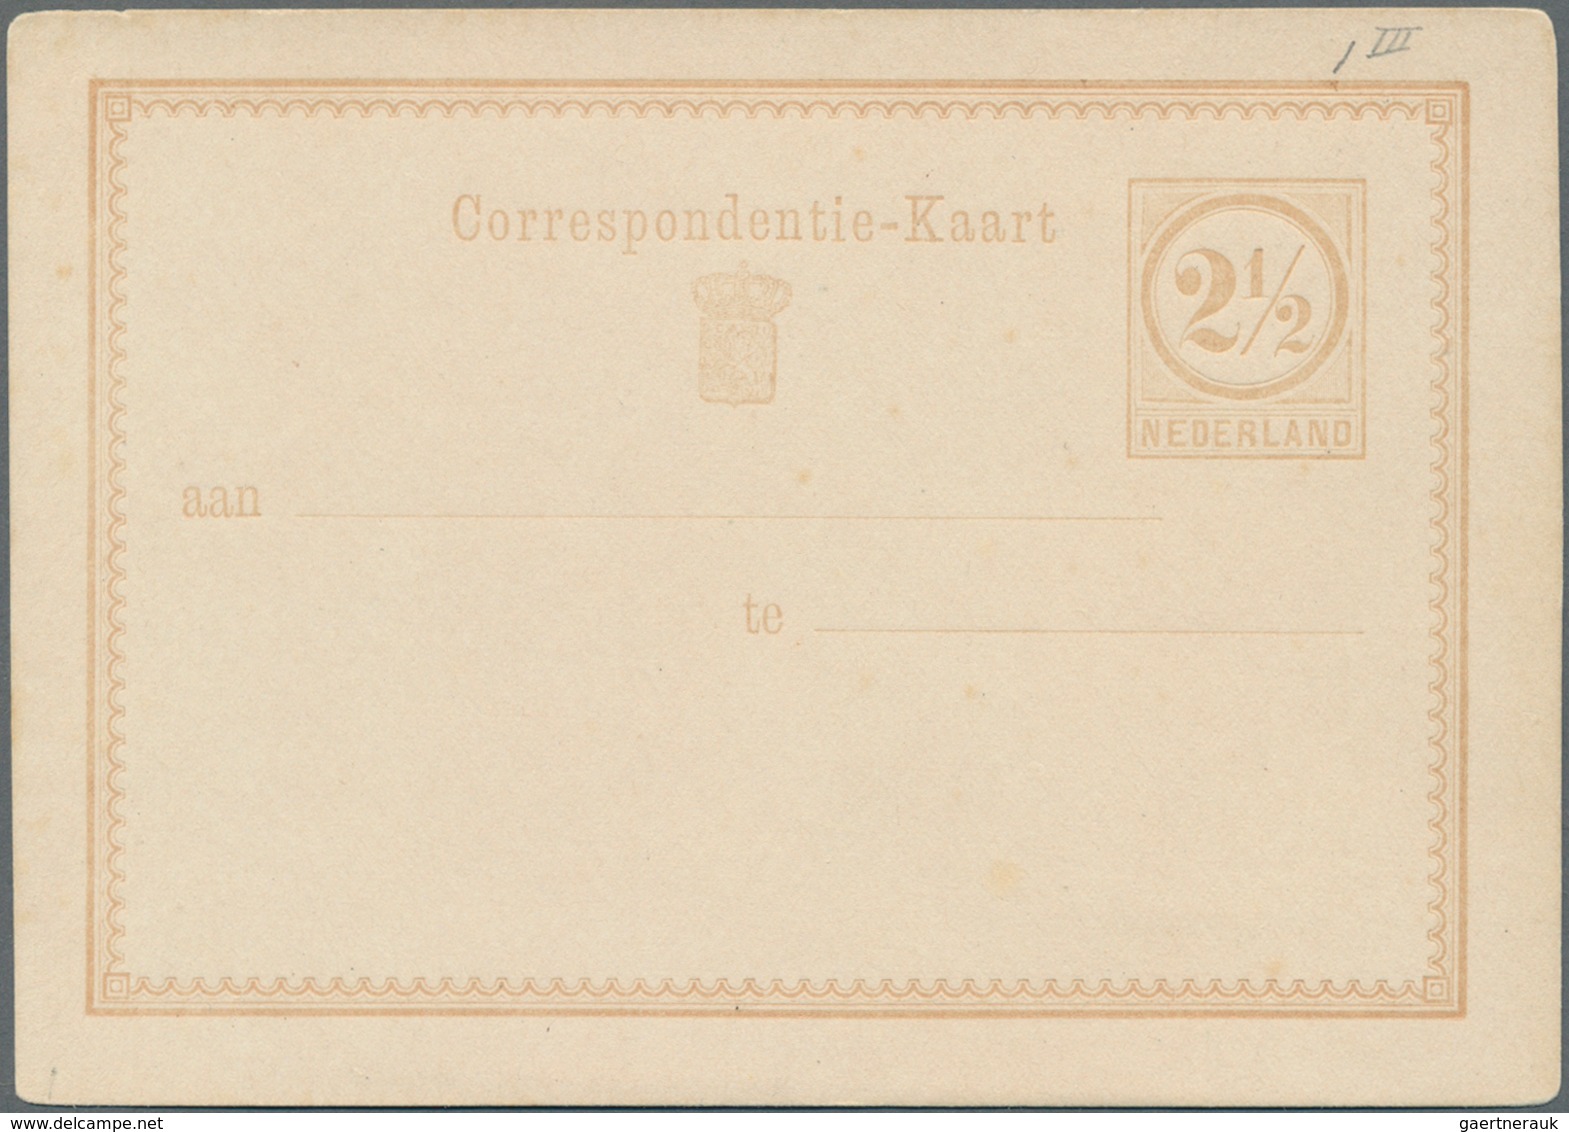 Niederlande - Ganzsachen: 1870, five proofs for a 2 1/2 stationery card. Seldomly seen.